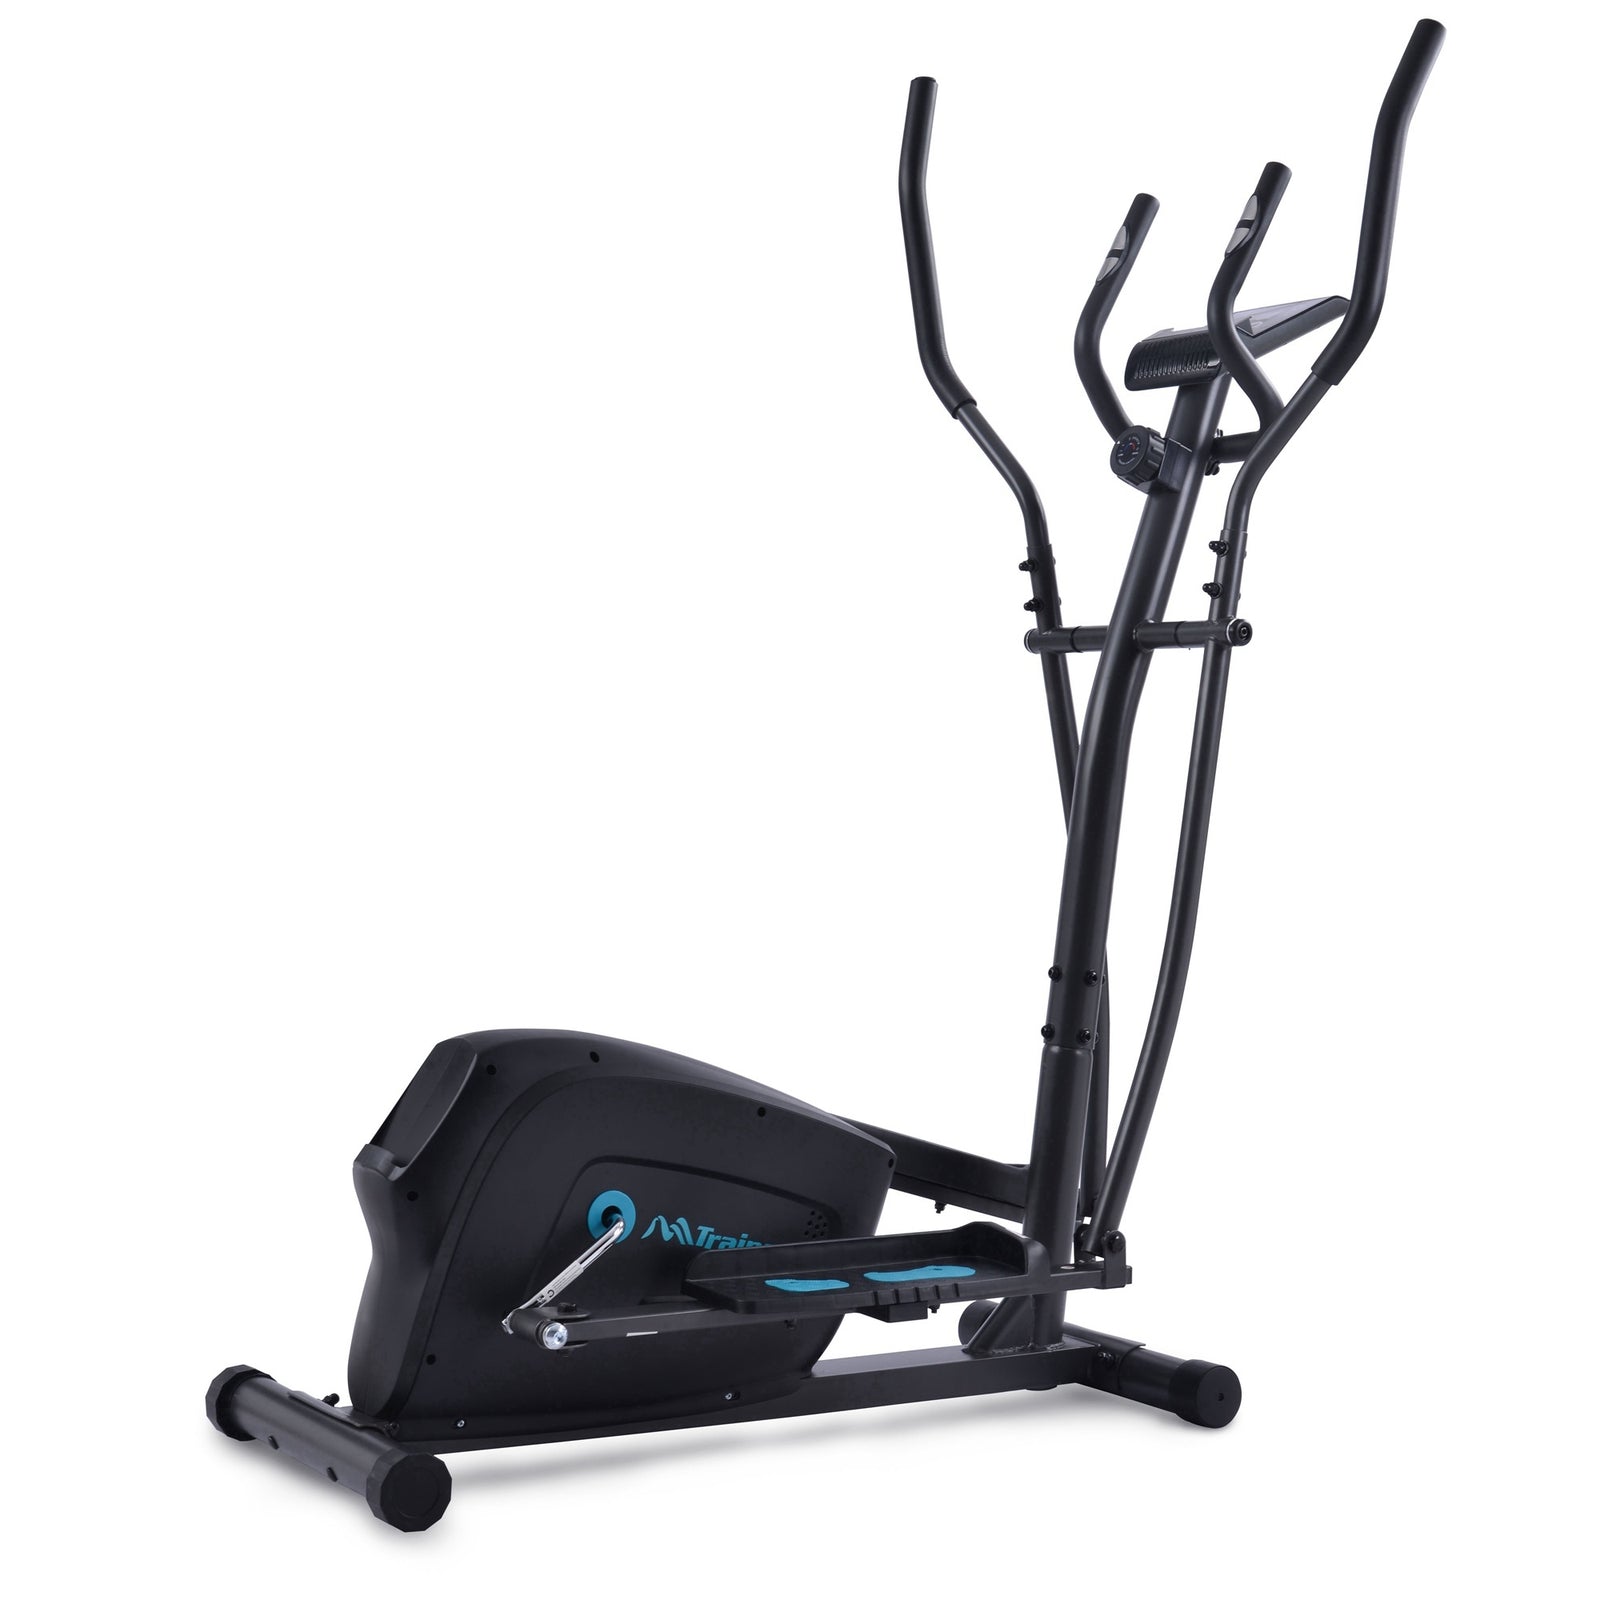 8-Level Magnetic Resistance Cardio Workout Elliptical Trainer Machine Upright Exercise Bike